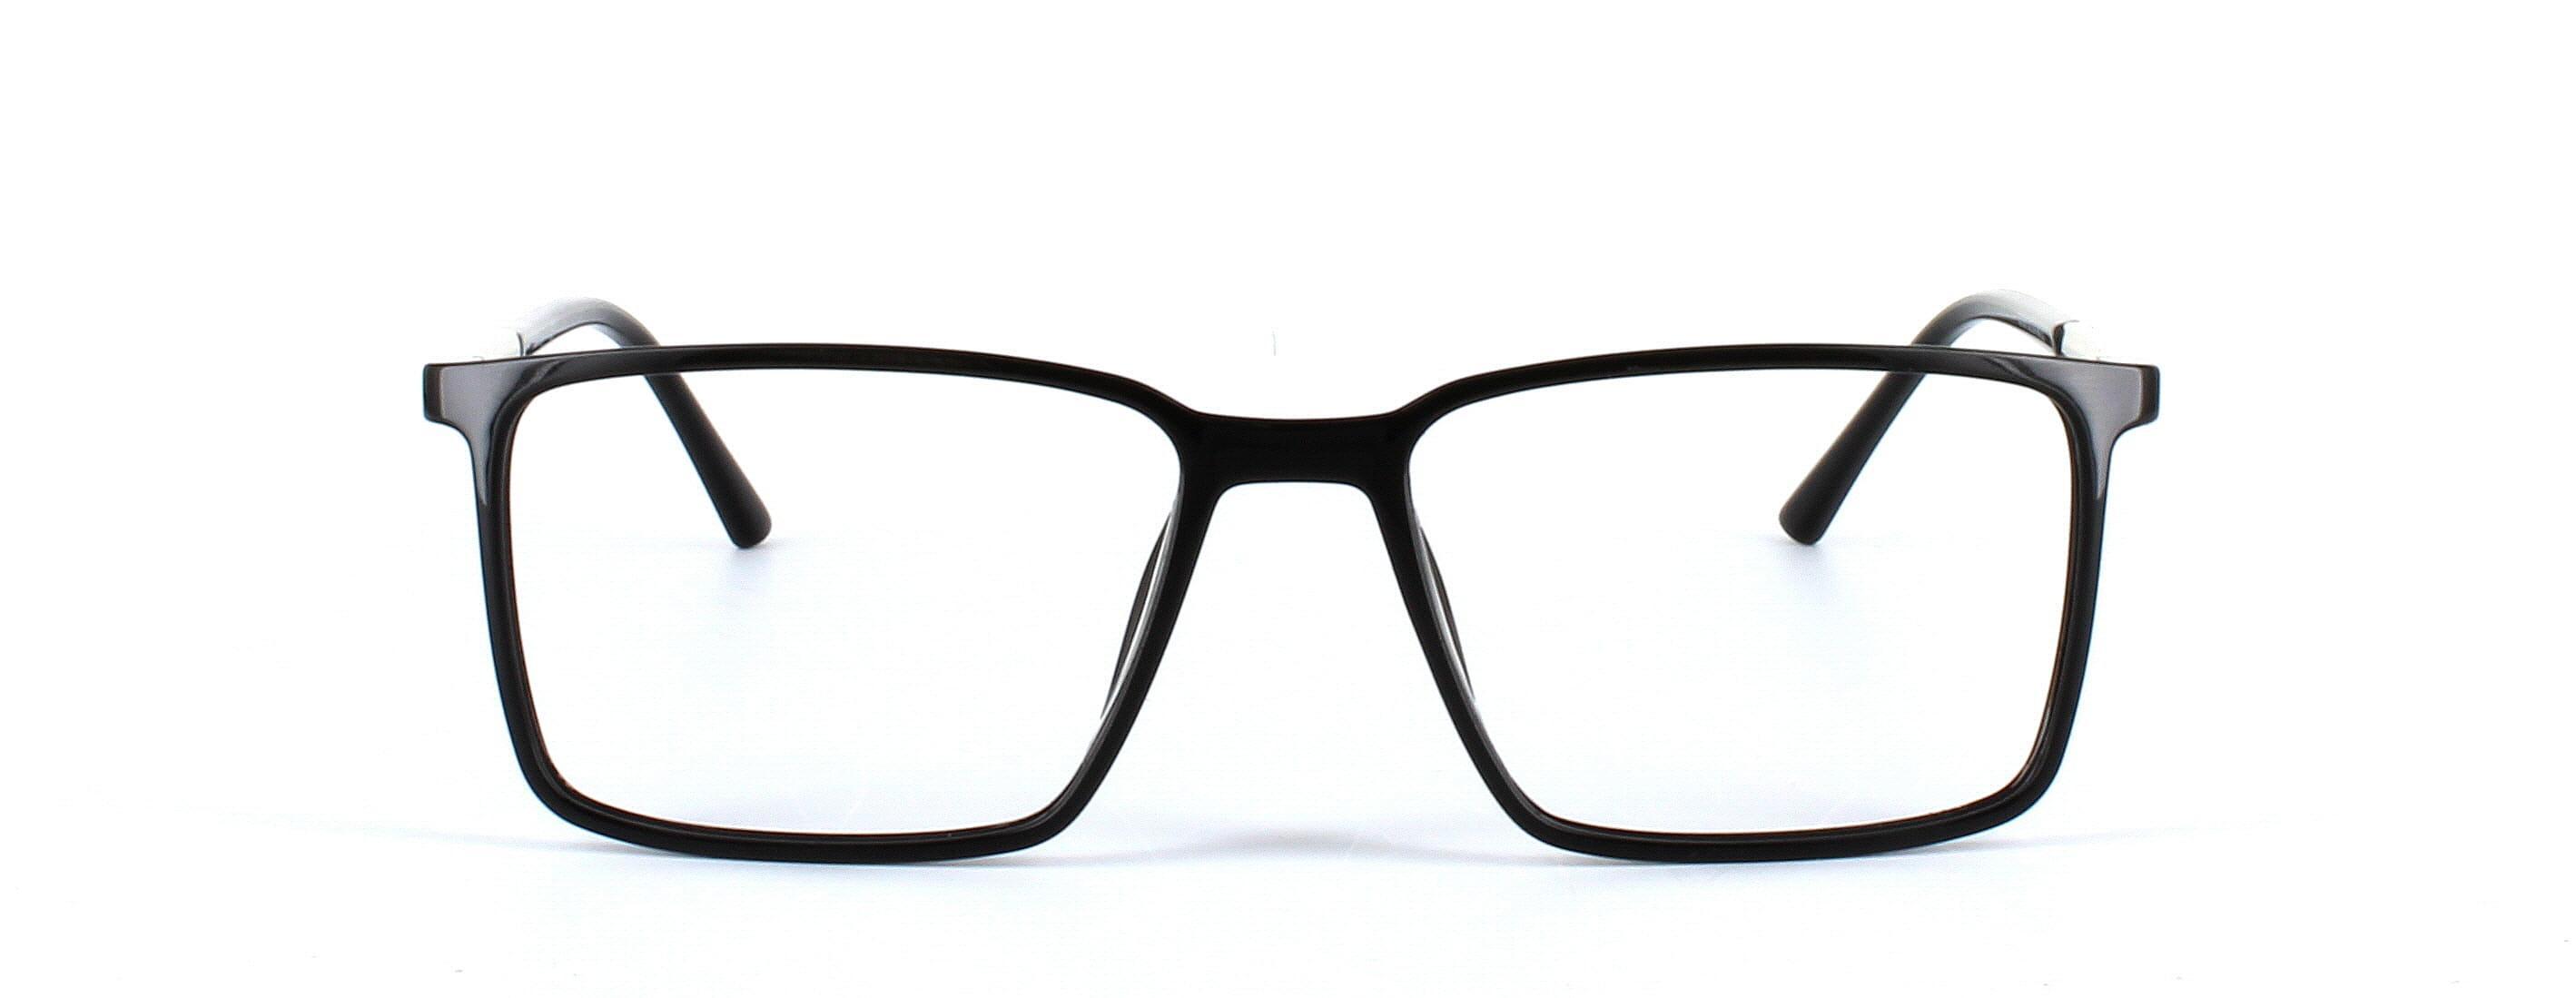 Preveza - Unisex aceate glasses - image view 5